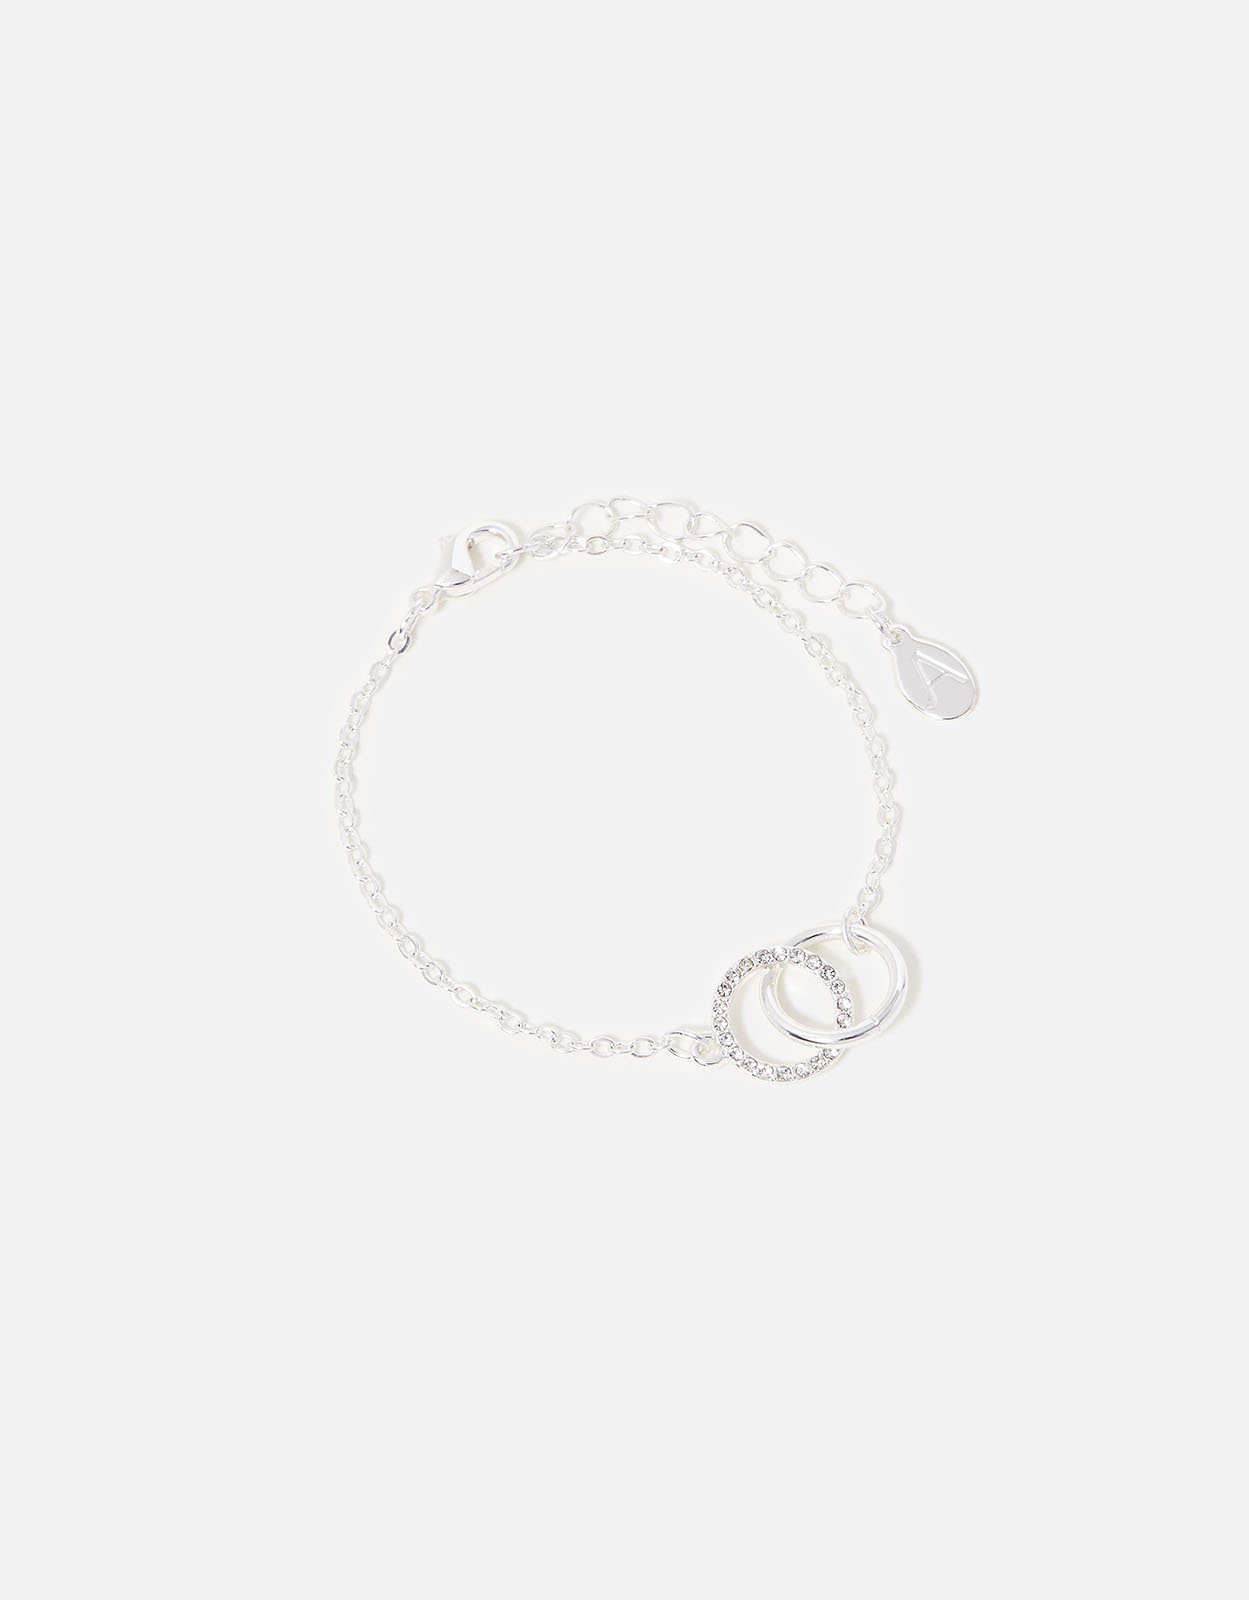 Accessorize Women's Silver Linked Circle Bracelet, Size: One Size